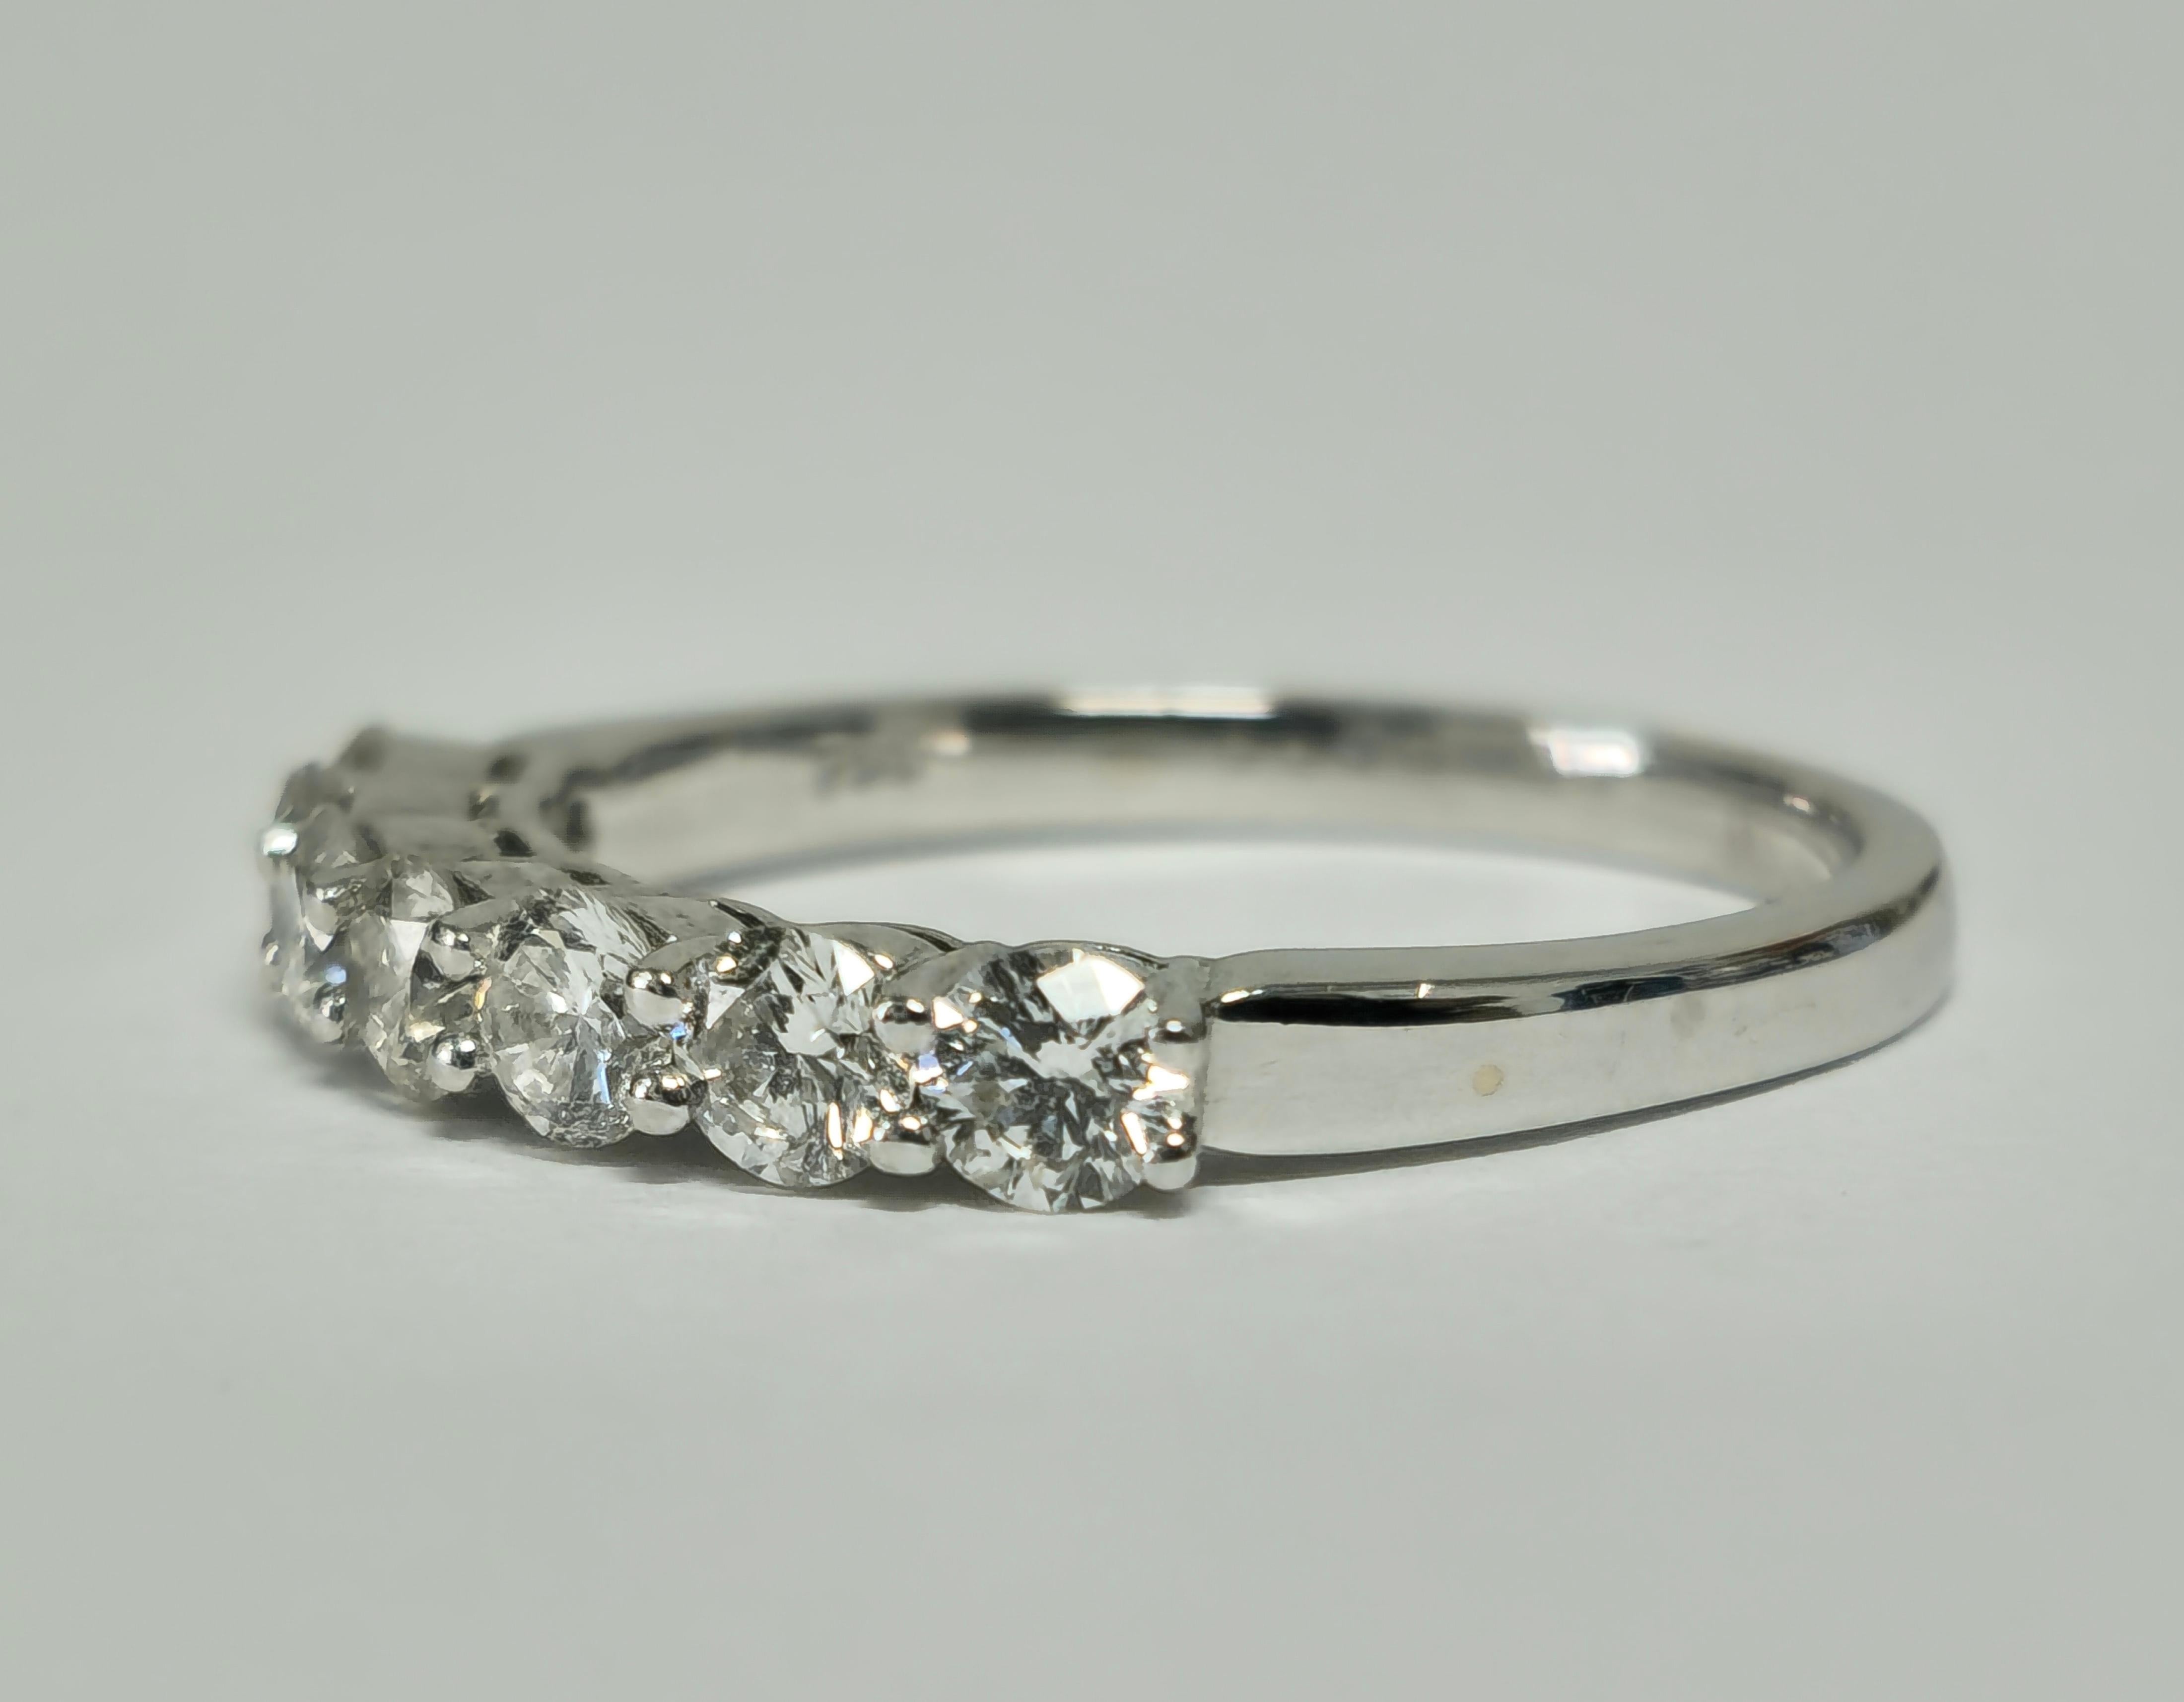 Brilliant Cut 18k Gold, VVS Diamond Engagement Ring For Her. For Sale